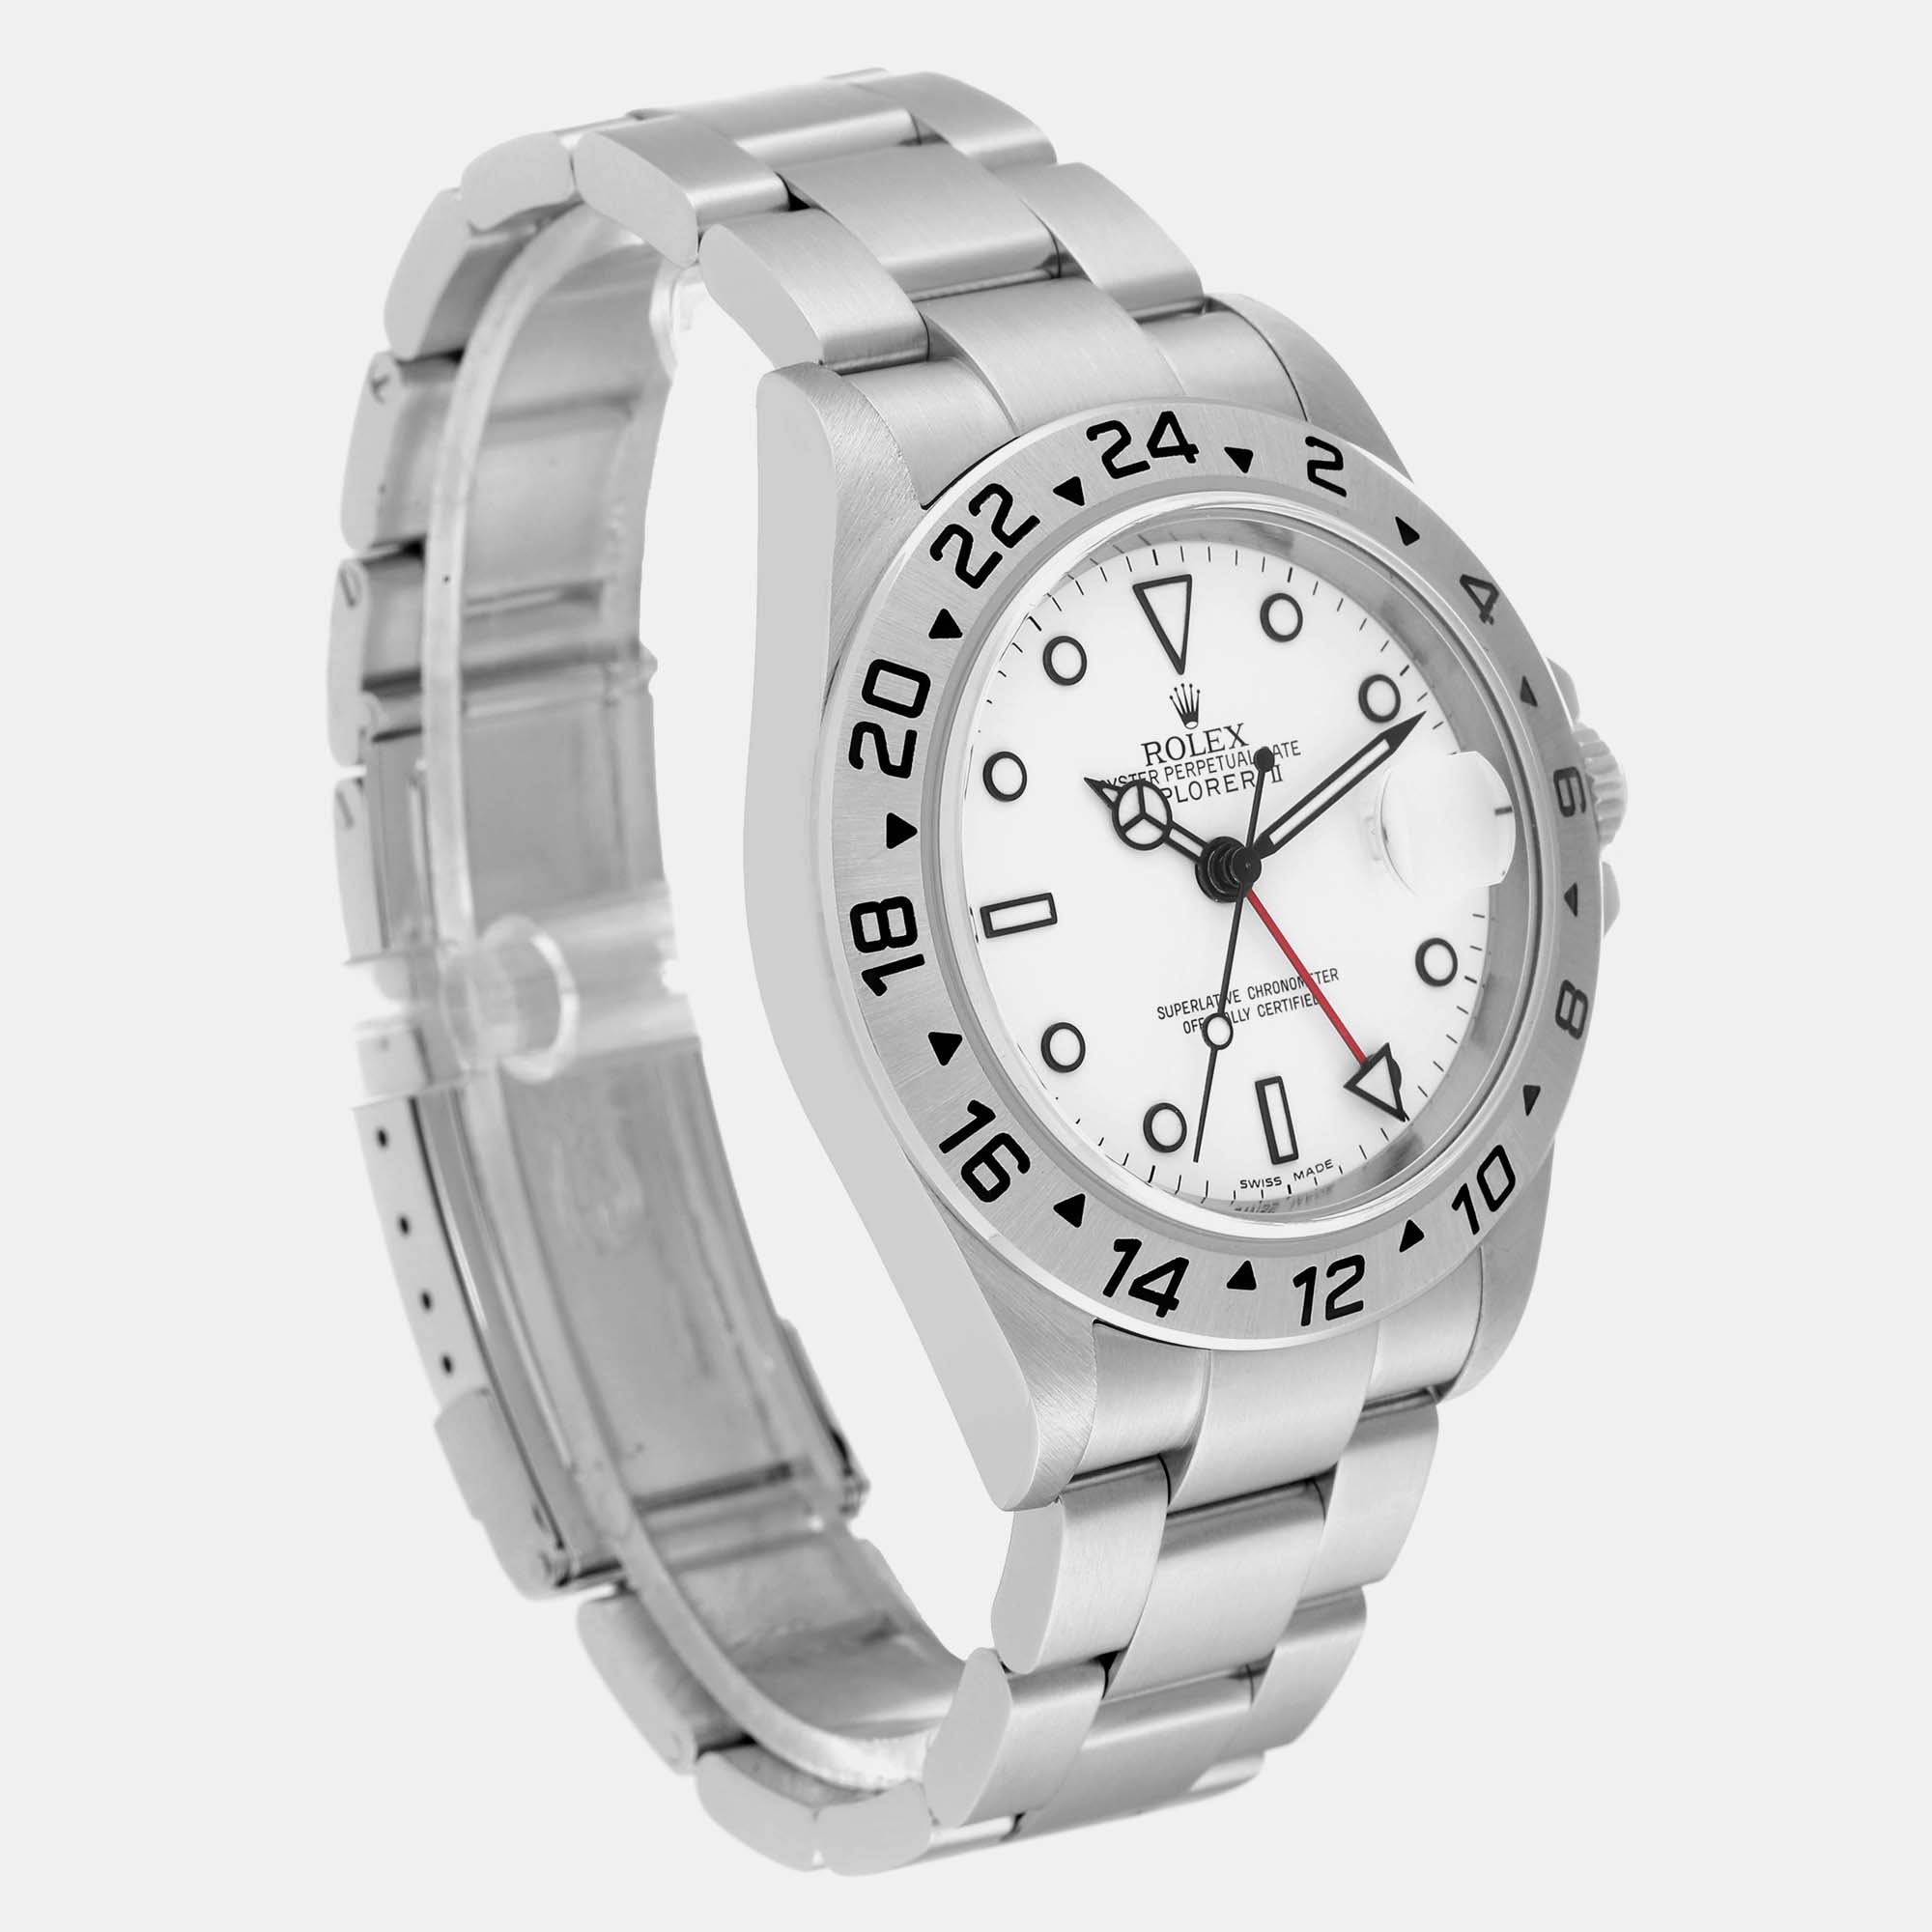 Rolex Explorer II Polar White Dial Steel Men's Watch 16570 40 Mm